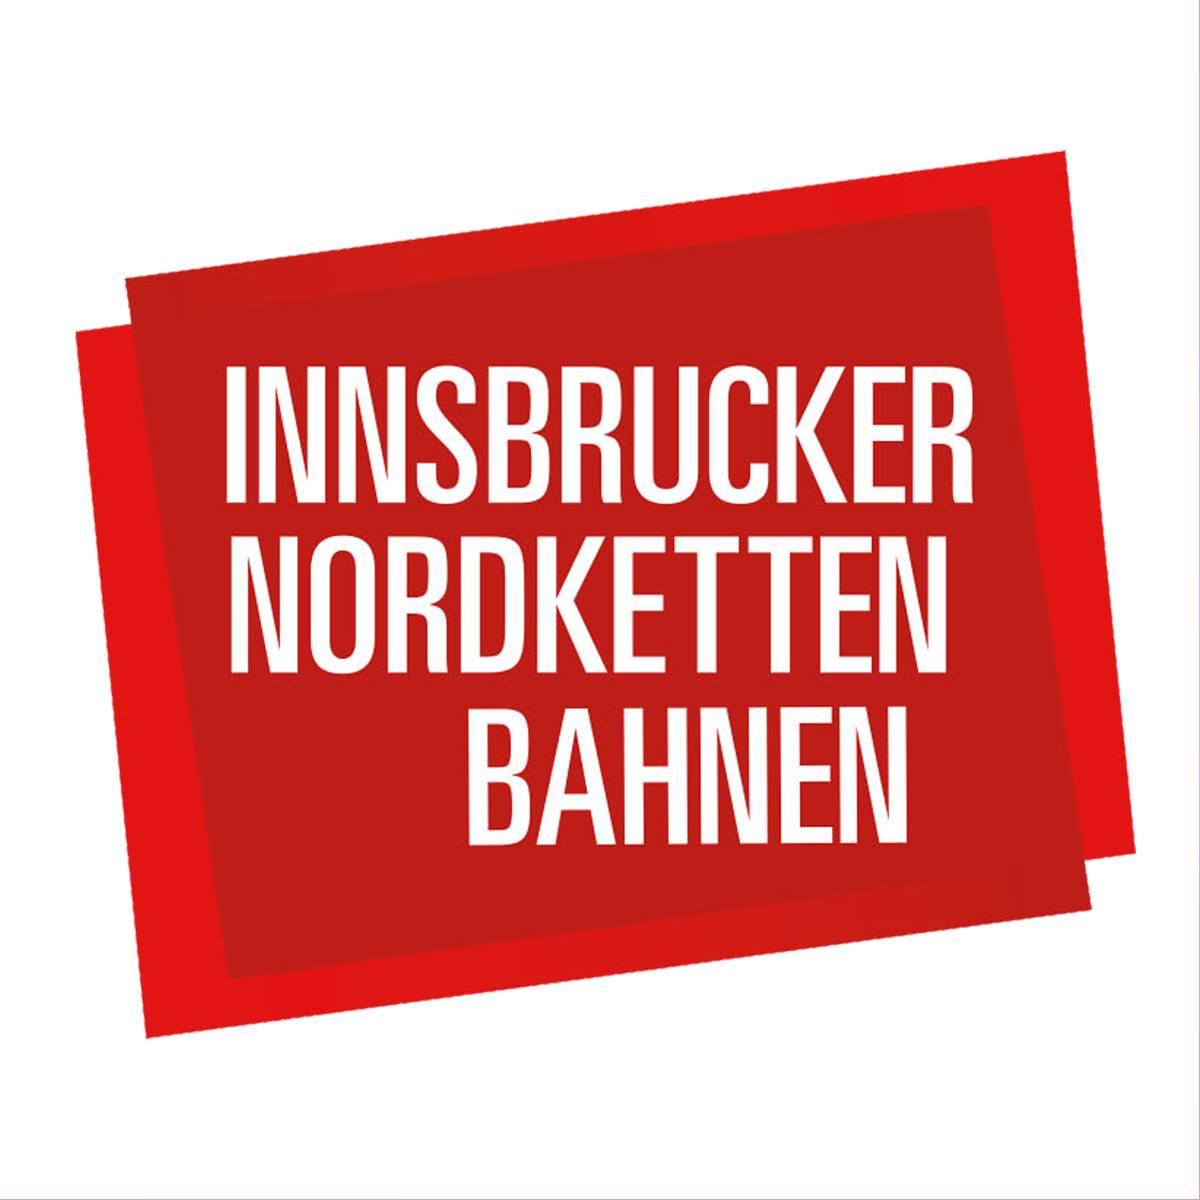 Innsbrucker Nordkettenbahnen Betriebs GmbH (Nordkette)